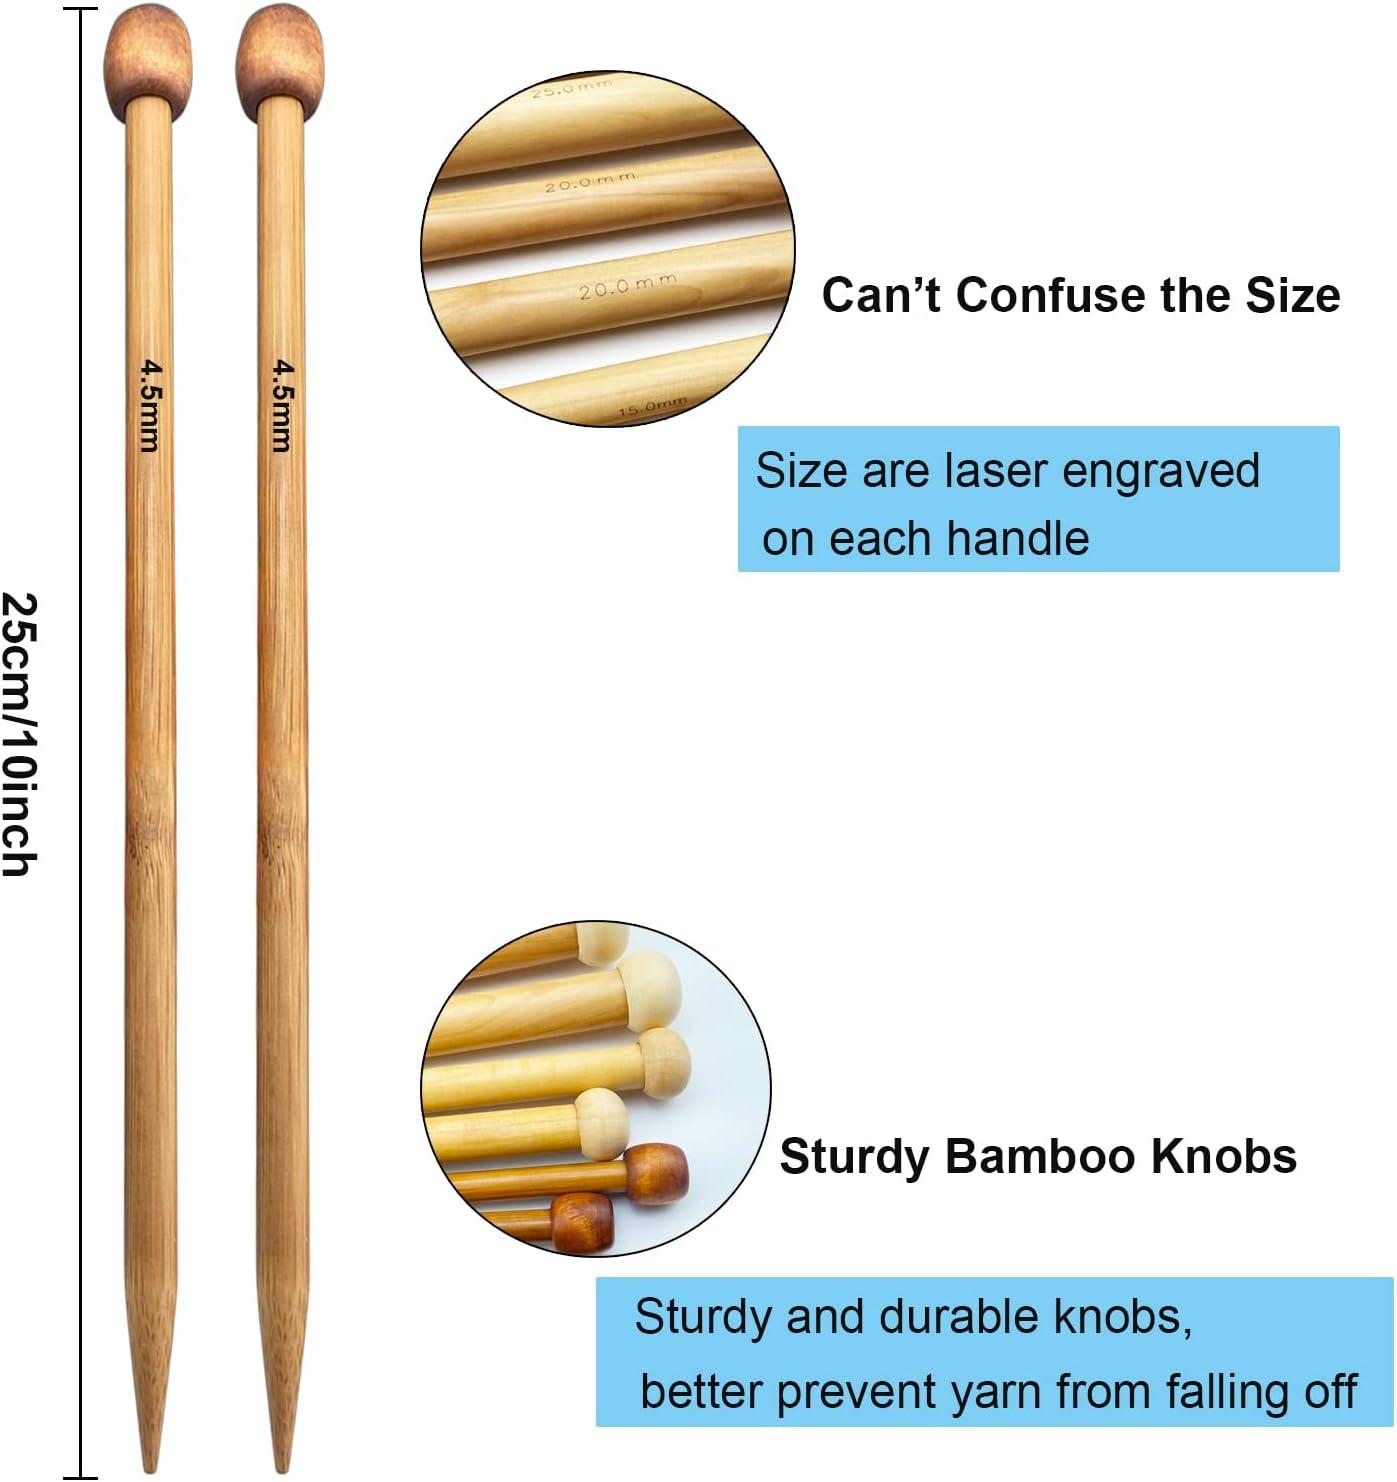 Weabetfu Bamboo Knitting Needle Straight Single Pointed 10-inch Length  Knitting Needles for Handmade DIY Knitting US Size 7(4.5mm) 4.5mm(US 7)